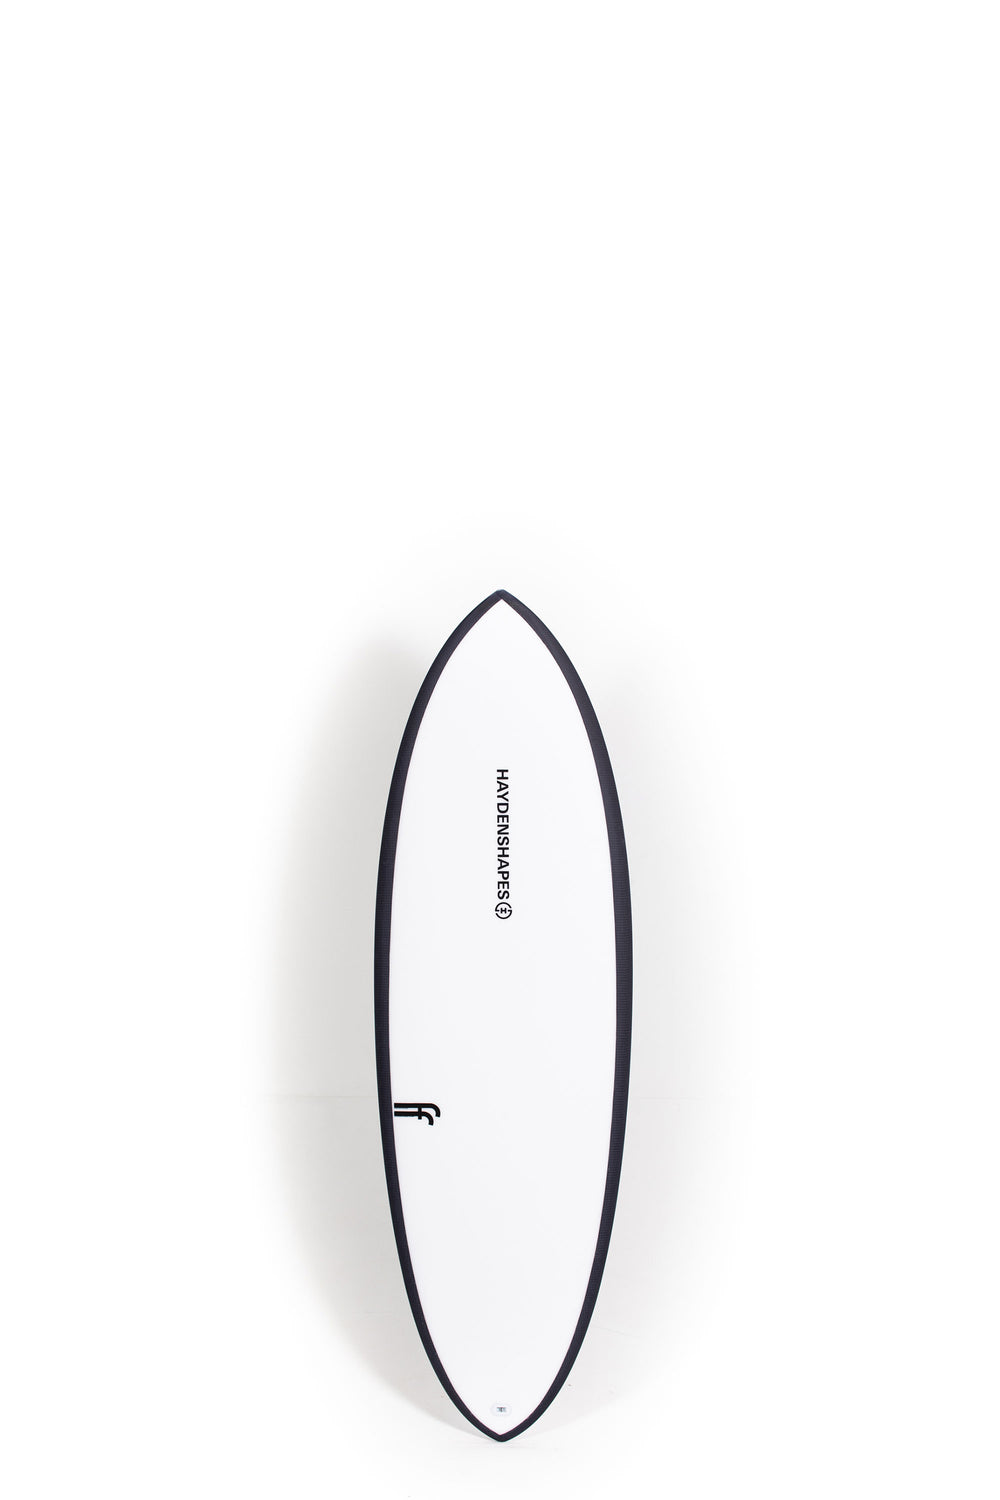 Pukas Surf Shop - HAYDEN SHAPES SURFBOARDS - HYPTO KRIPTO 5'4